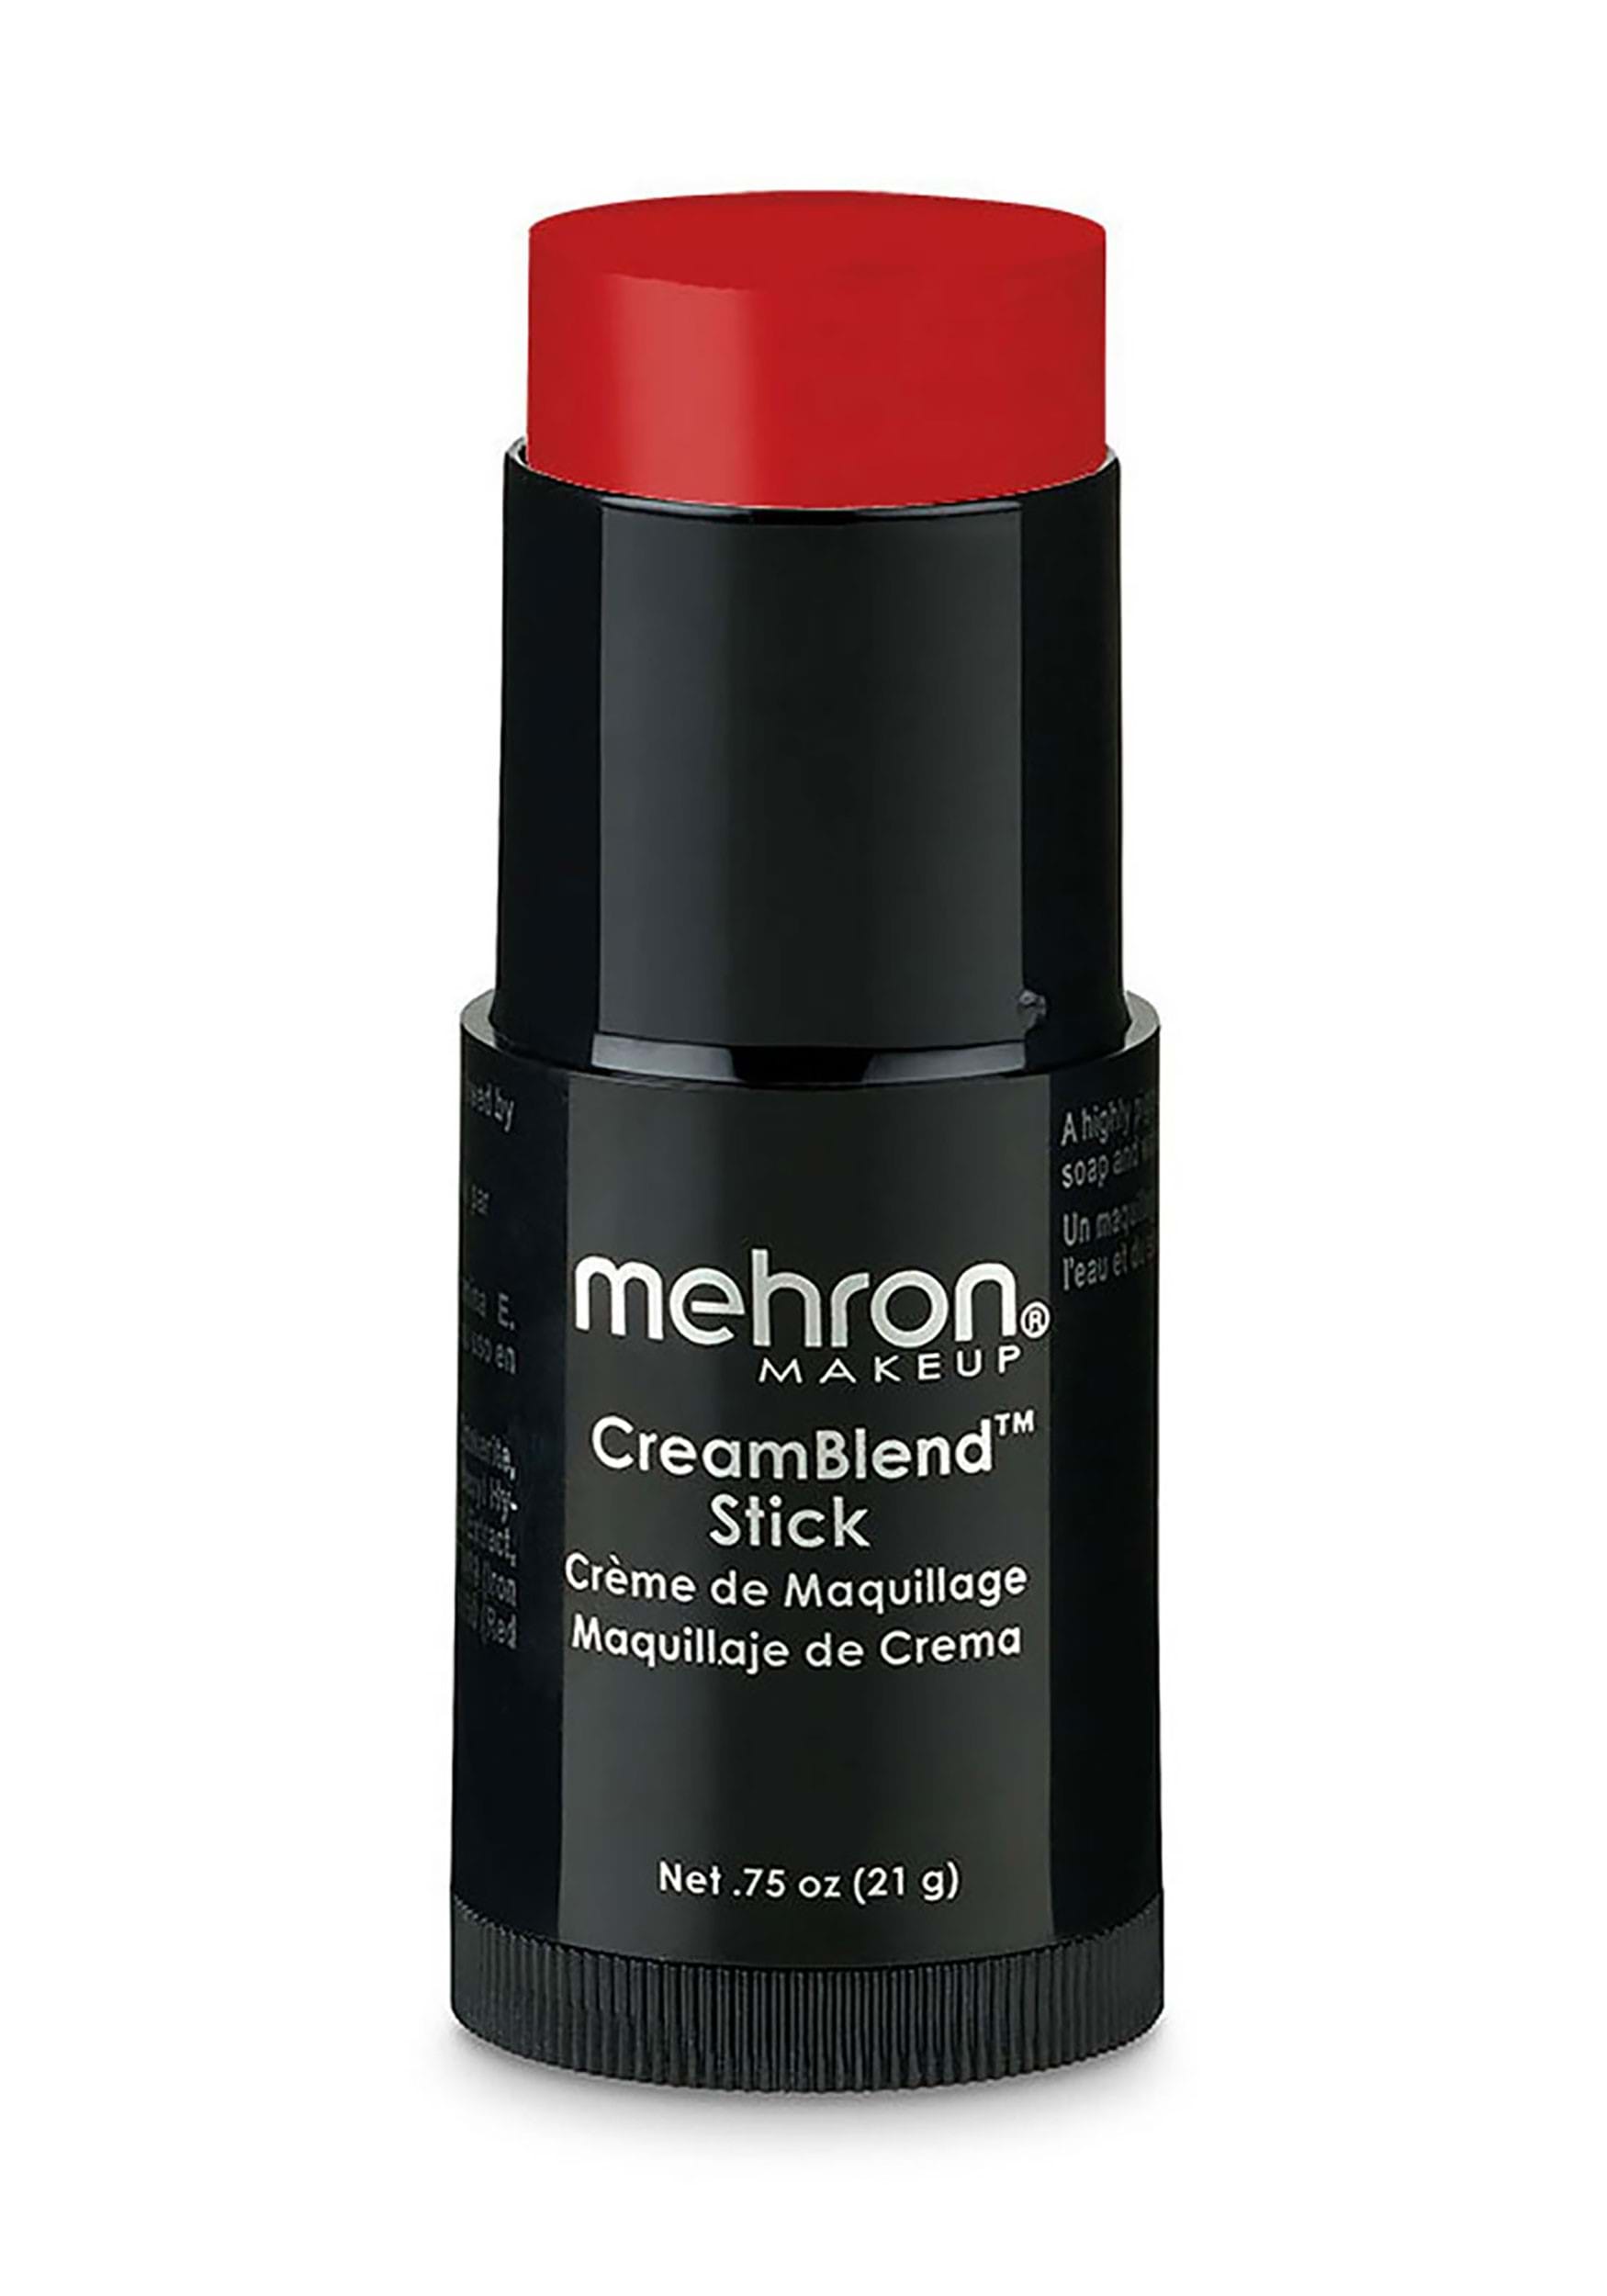 CreamBlend Stick | Mehron, Red